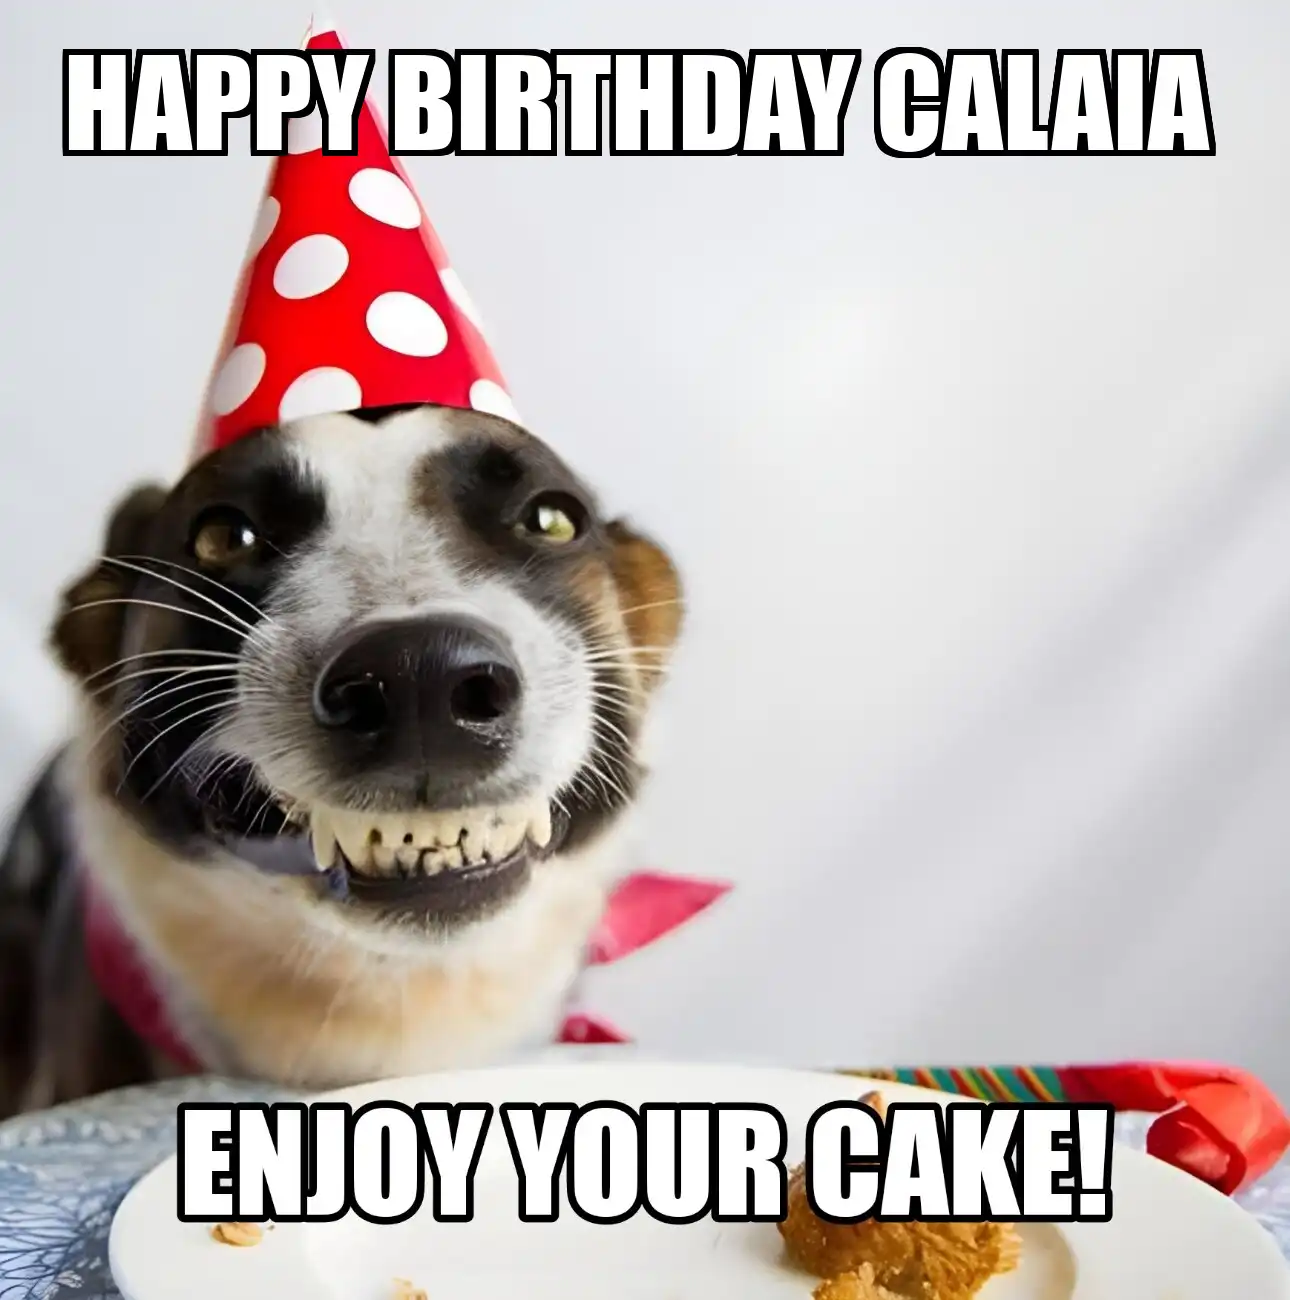 Happy Birthday Calaia Enjoy Your Cake Dog Meme